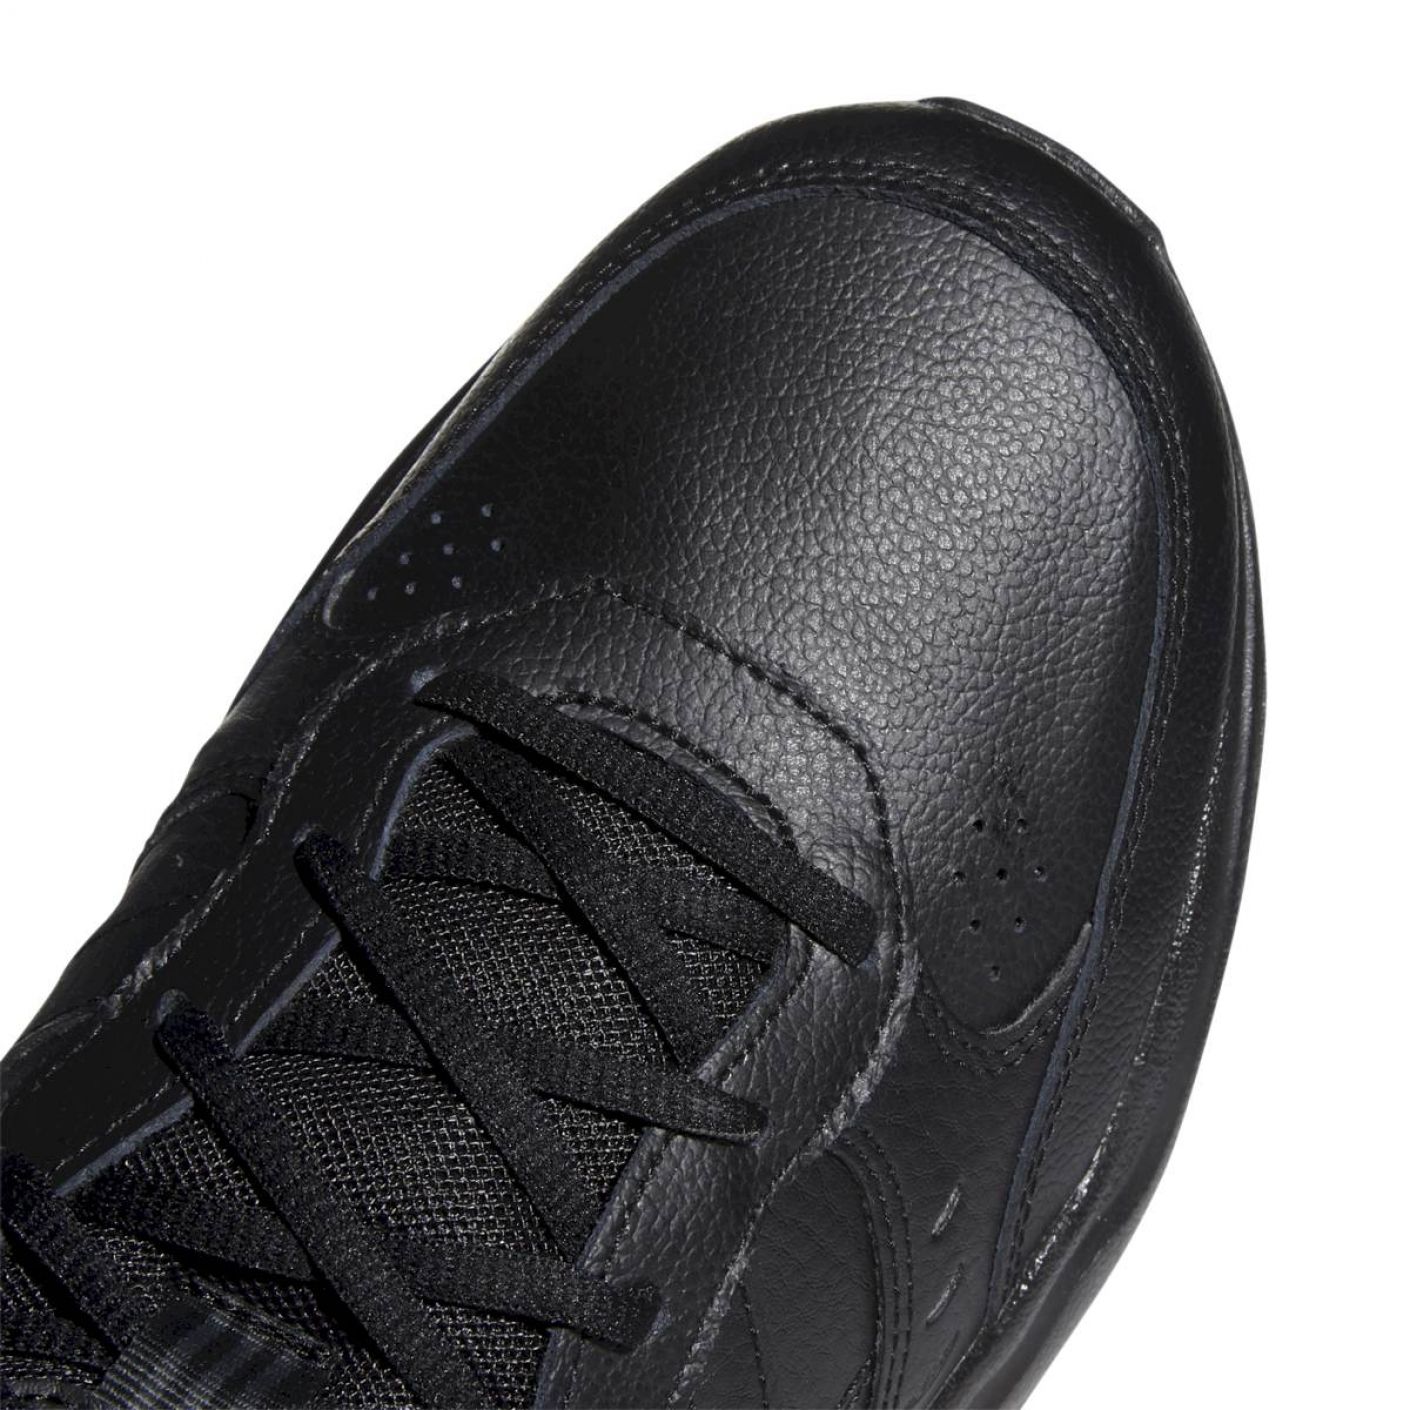 Adidas Strutter Core Black/Grey Six da Uomo